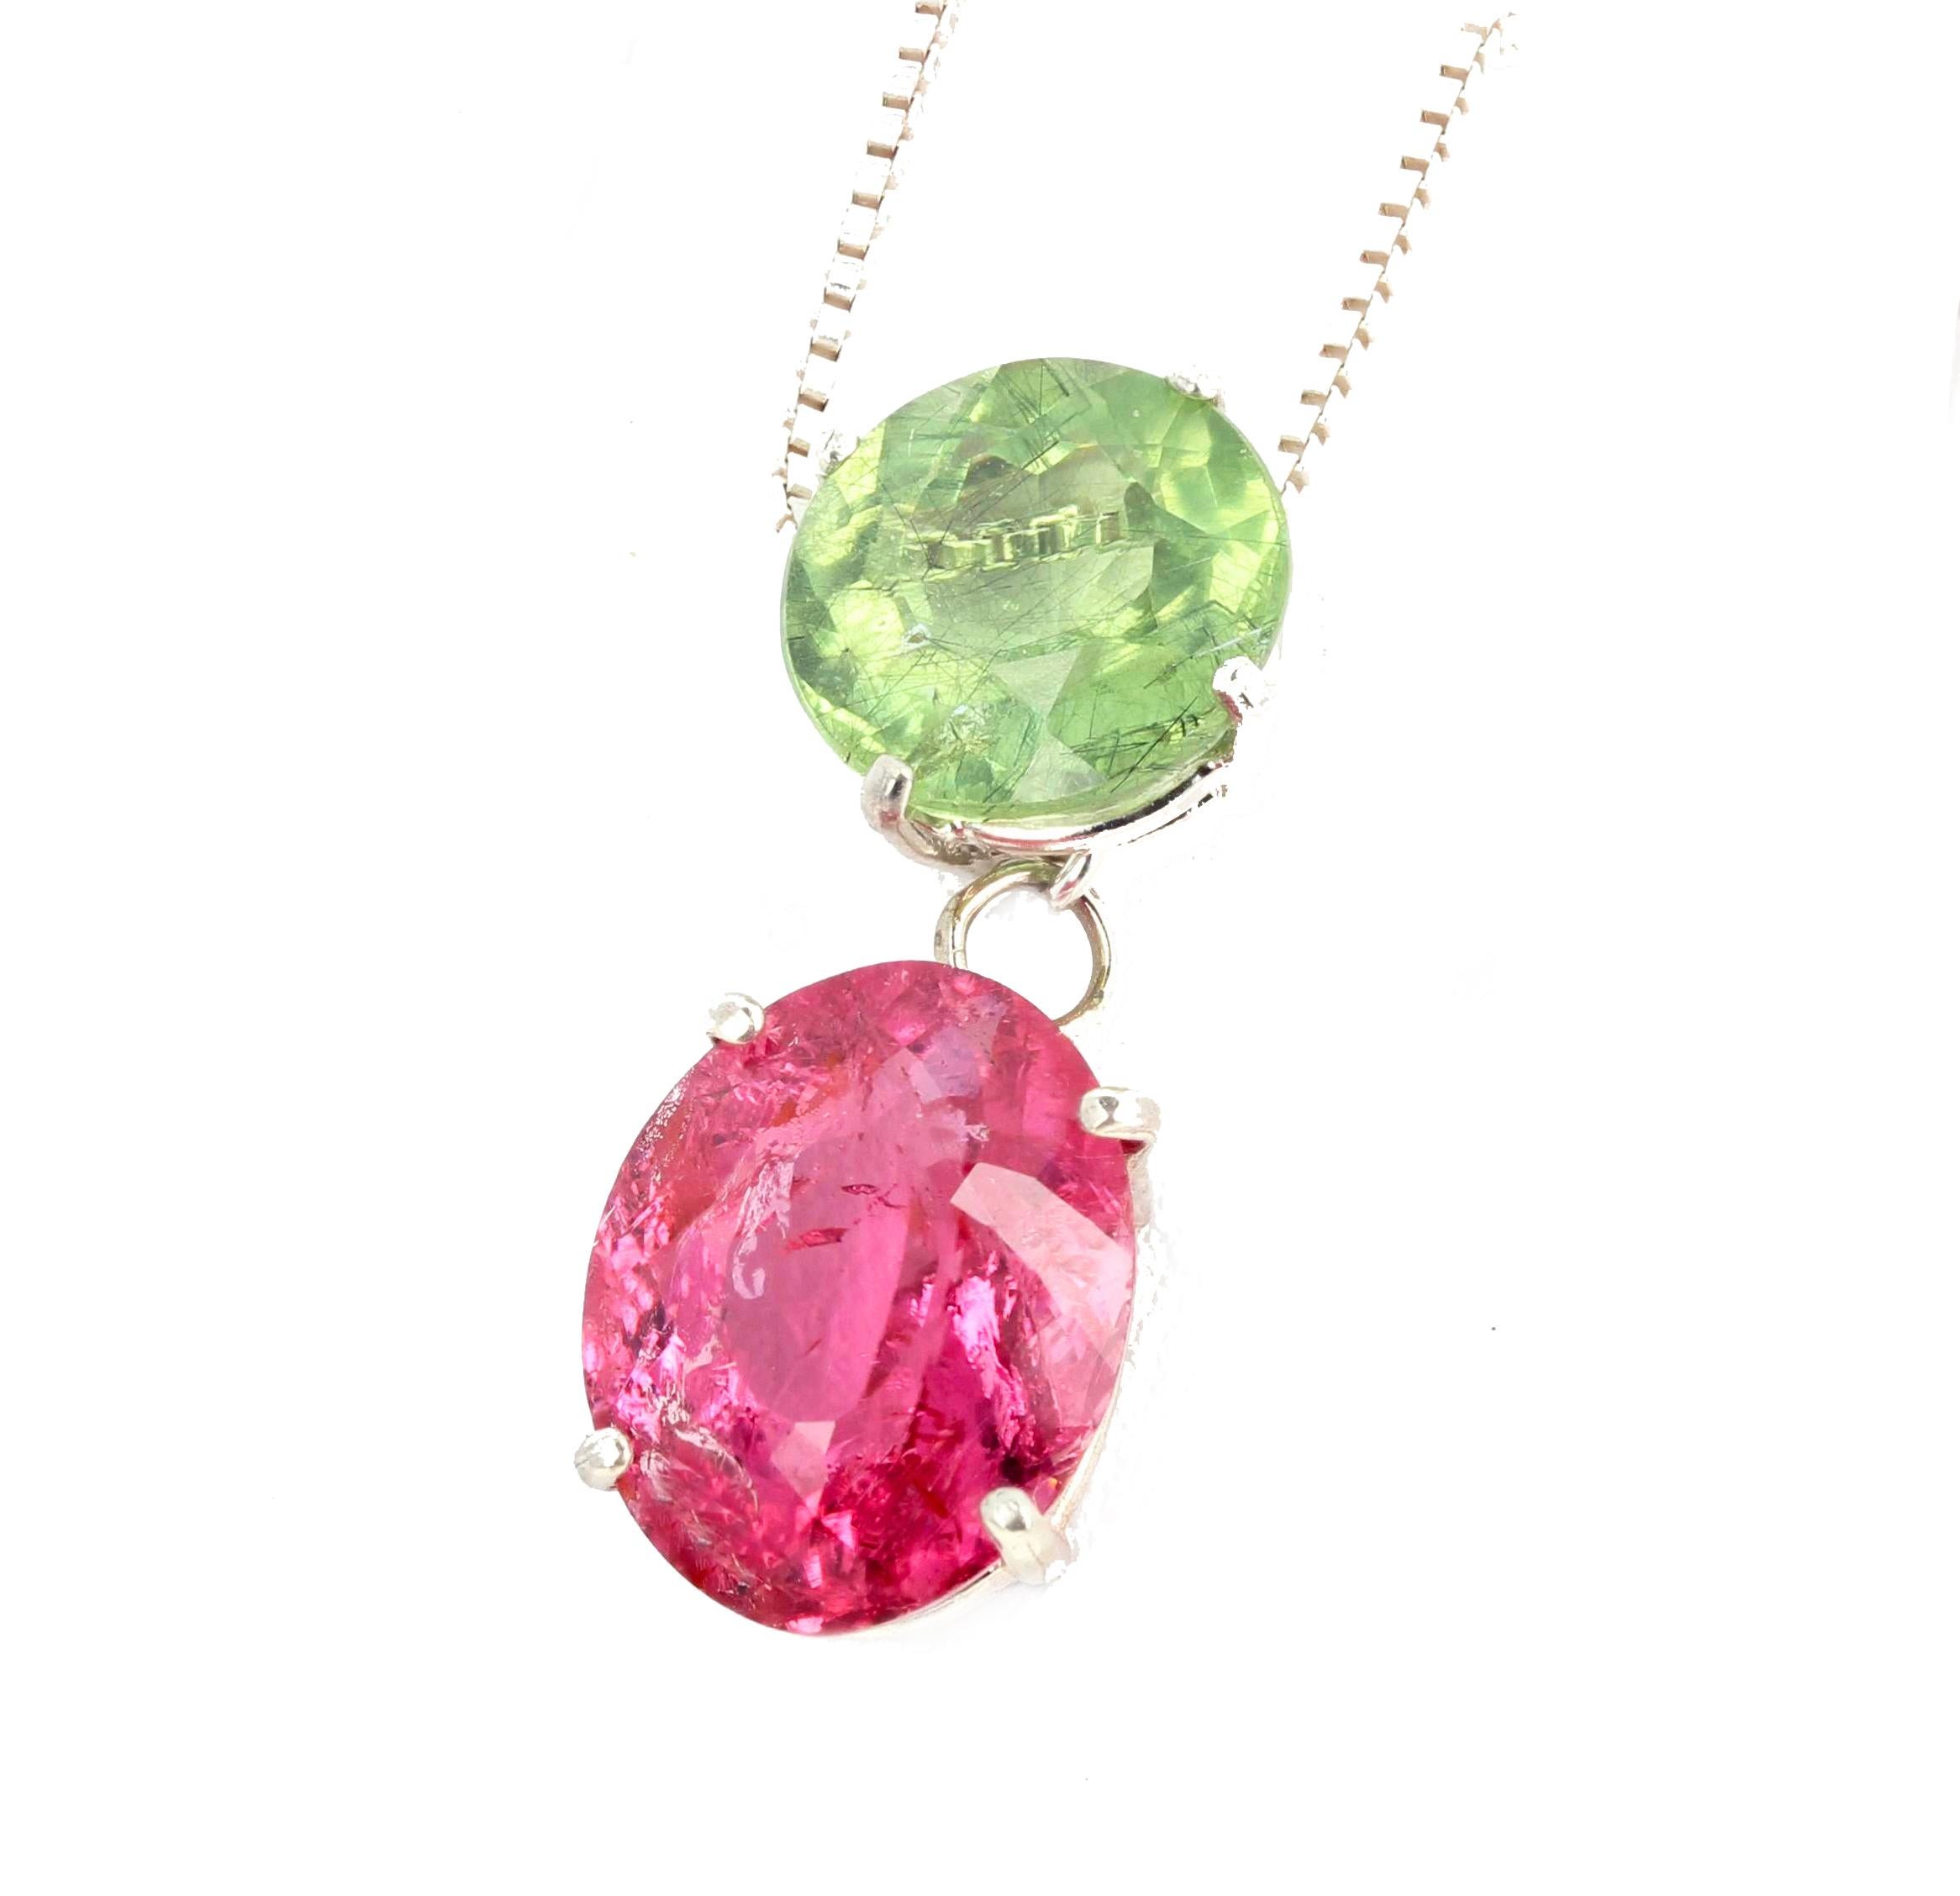 Bright round sparkling natural green 4 carat (10 mm) Tourmaline drops a glittering bright pink 6.4 carat  (13.5 mm. x 10.6 mm) natural pink Tourmaline set in a sterling silver pendant. 